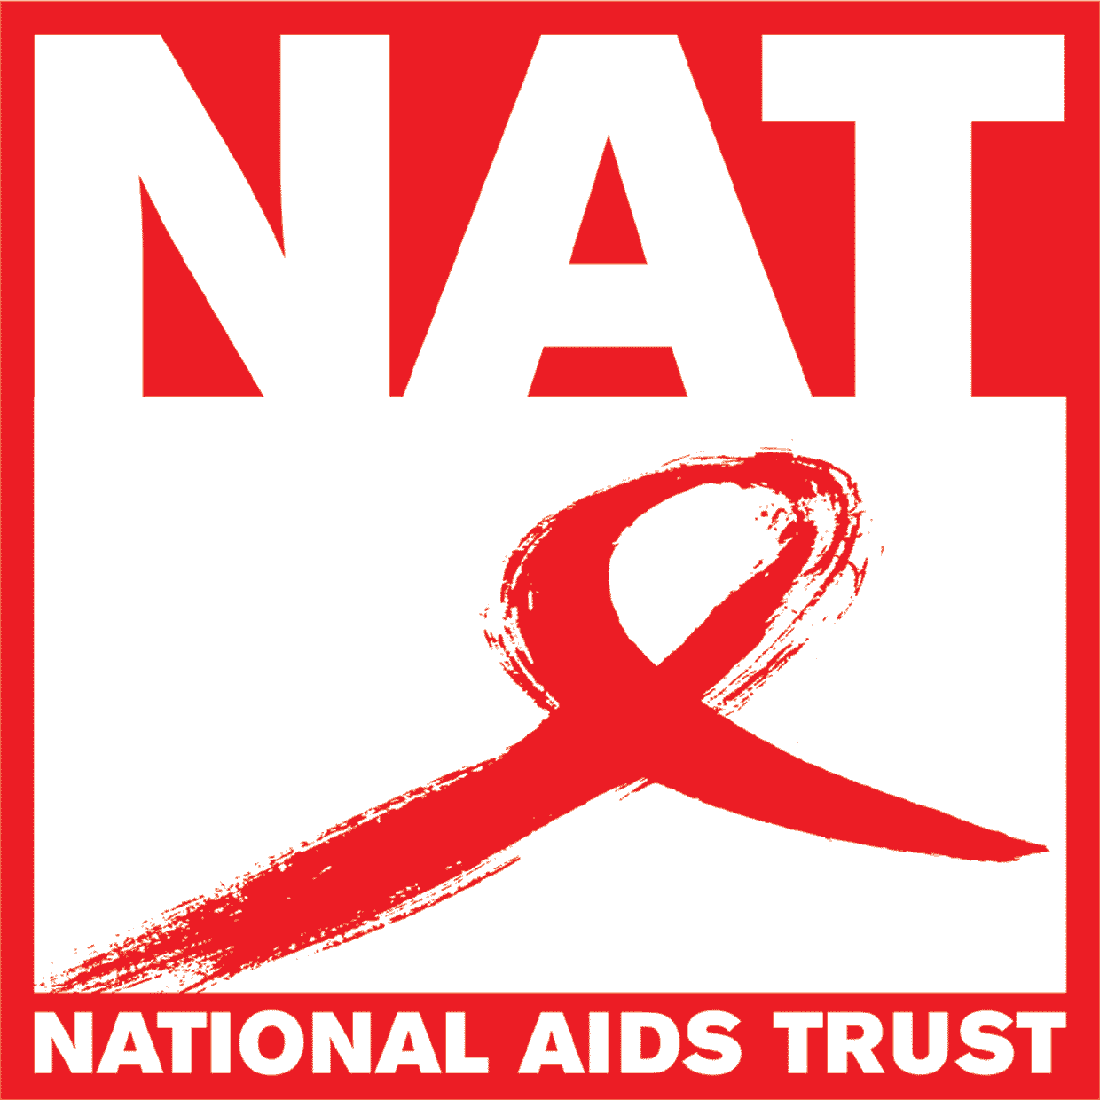 National Aids Trust logo designed by ideology.uk.com